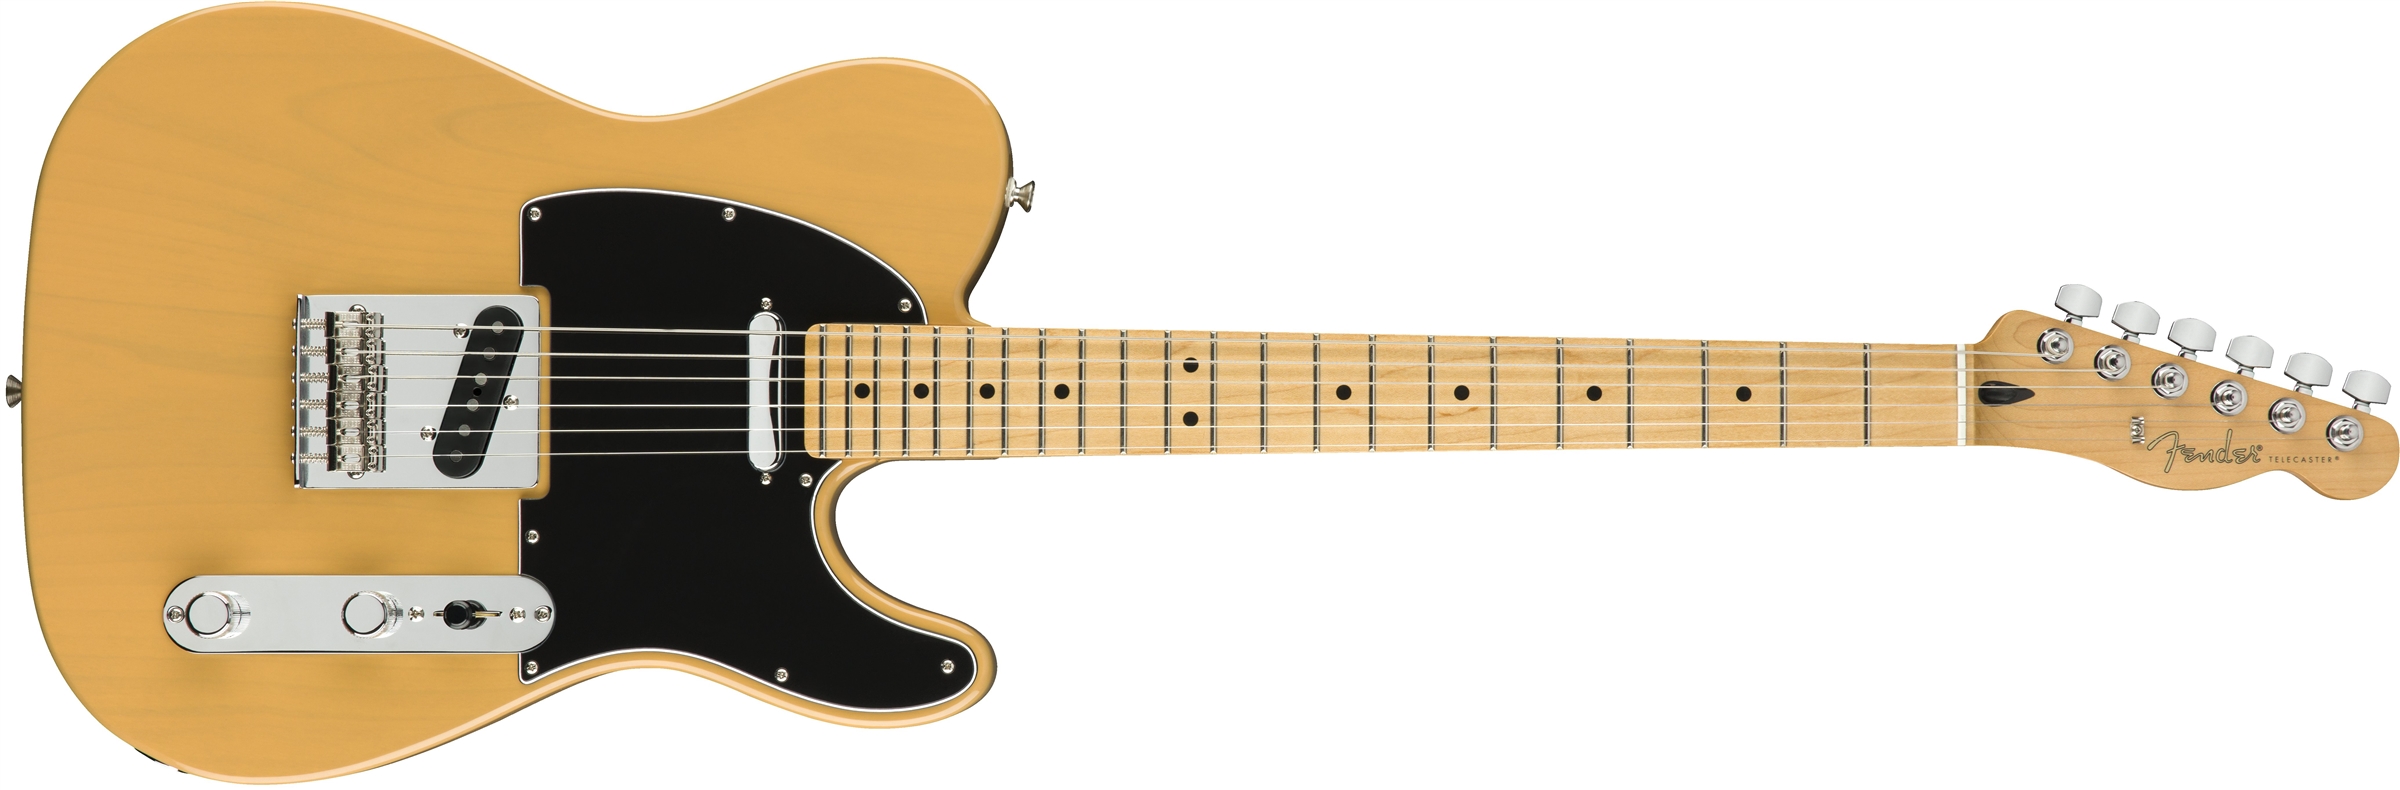 Fender Tele Player Mex Mn - Butterscotch Blonde - E-Gitarre in Teleform - Variation 1